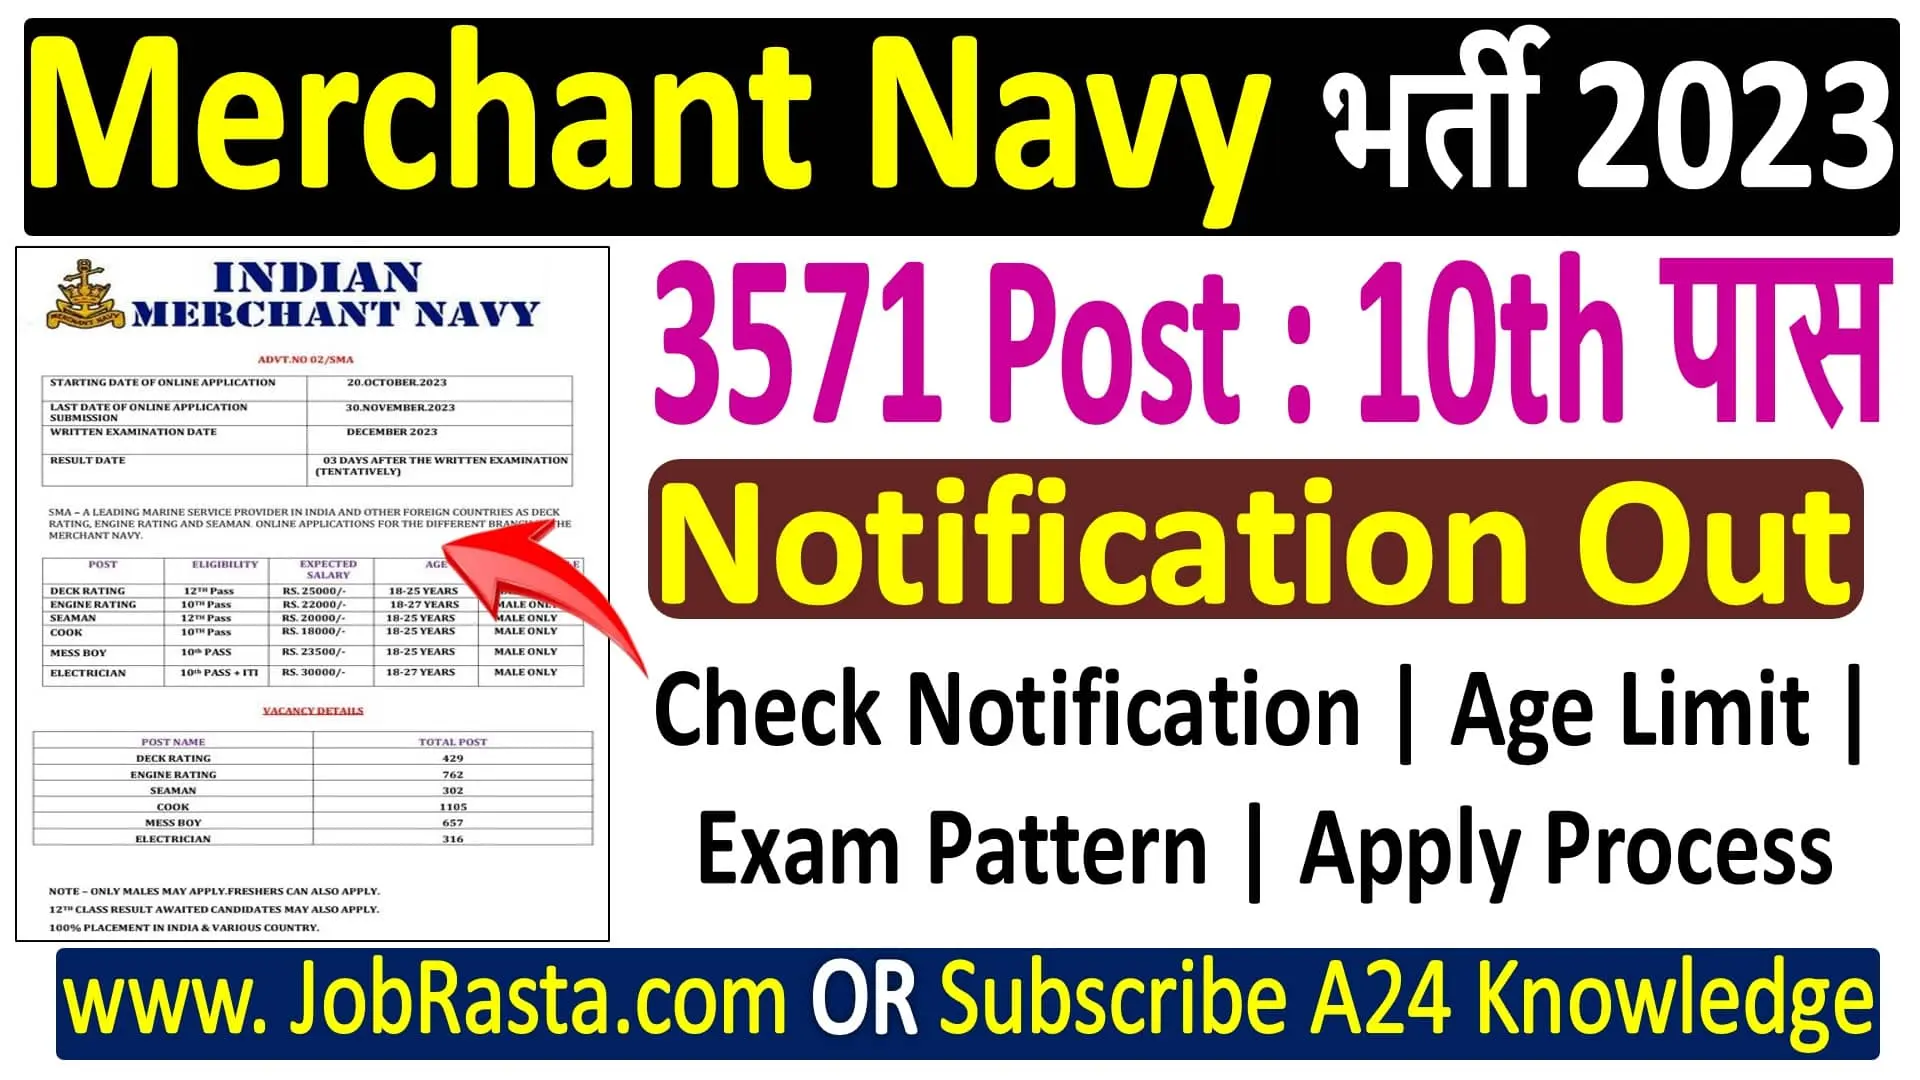 Merchant Navy Recruitment 2023 Notification